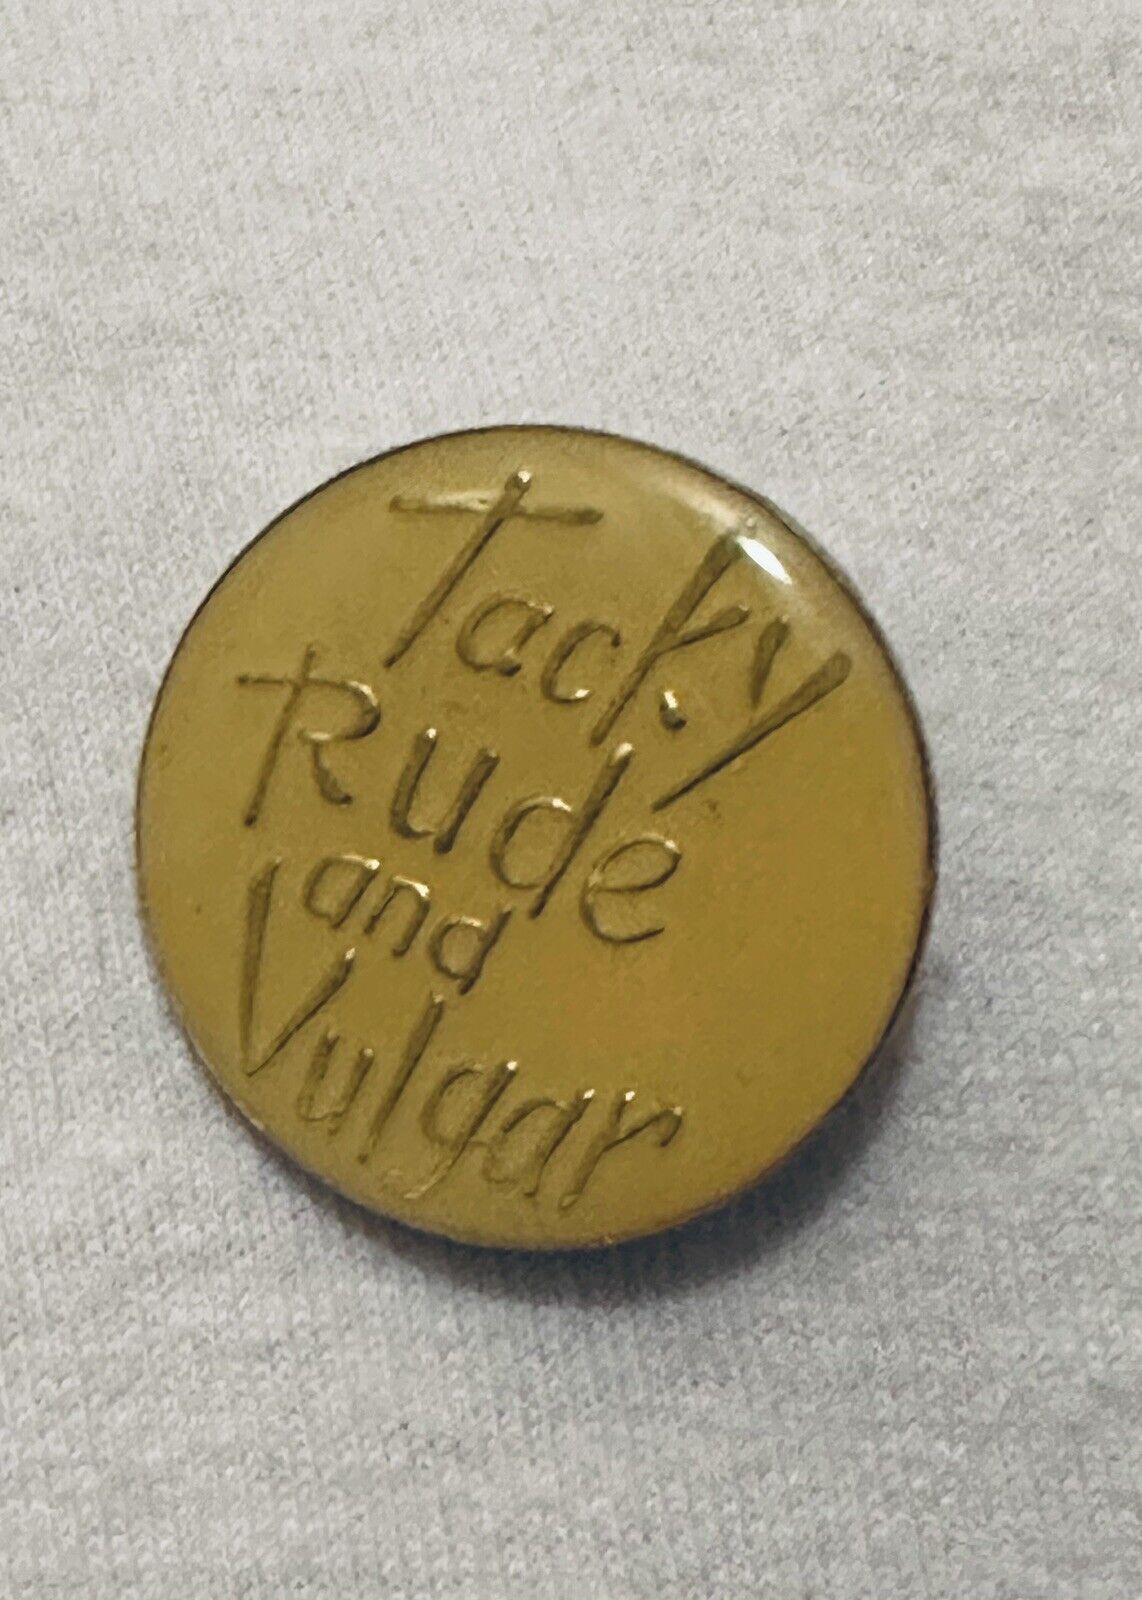 Vintage 1980s Enamel Risqué Novelty Pin “Tacky Rude and Vulgar”